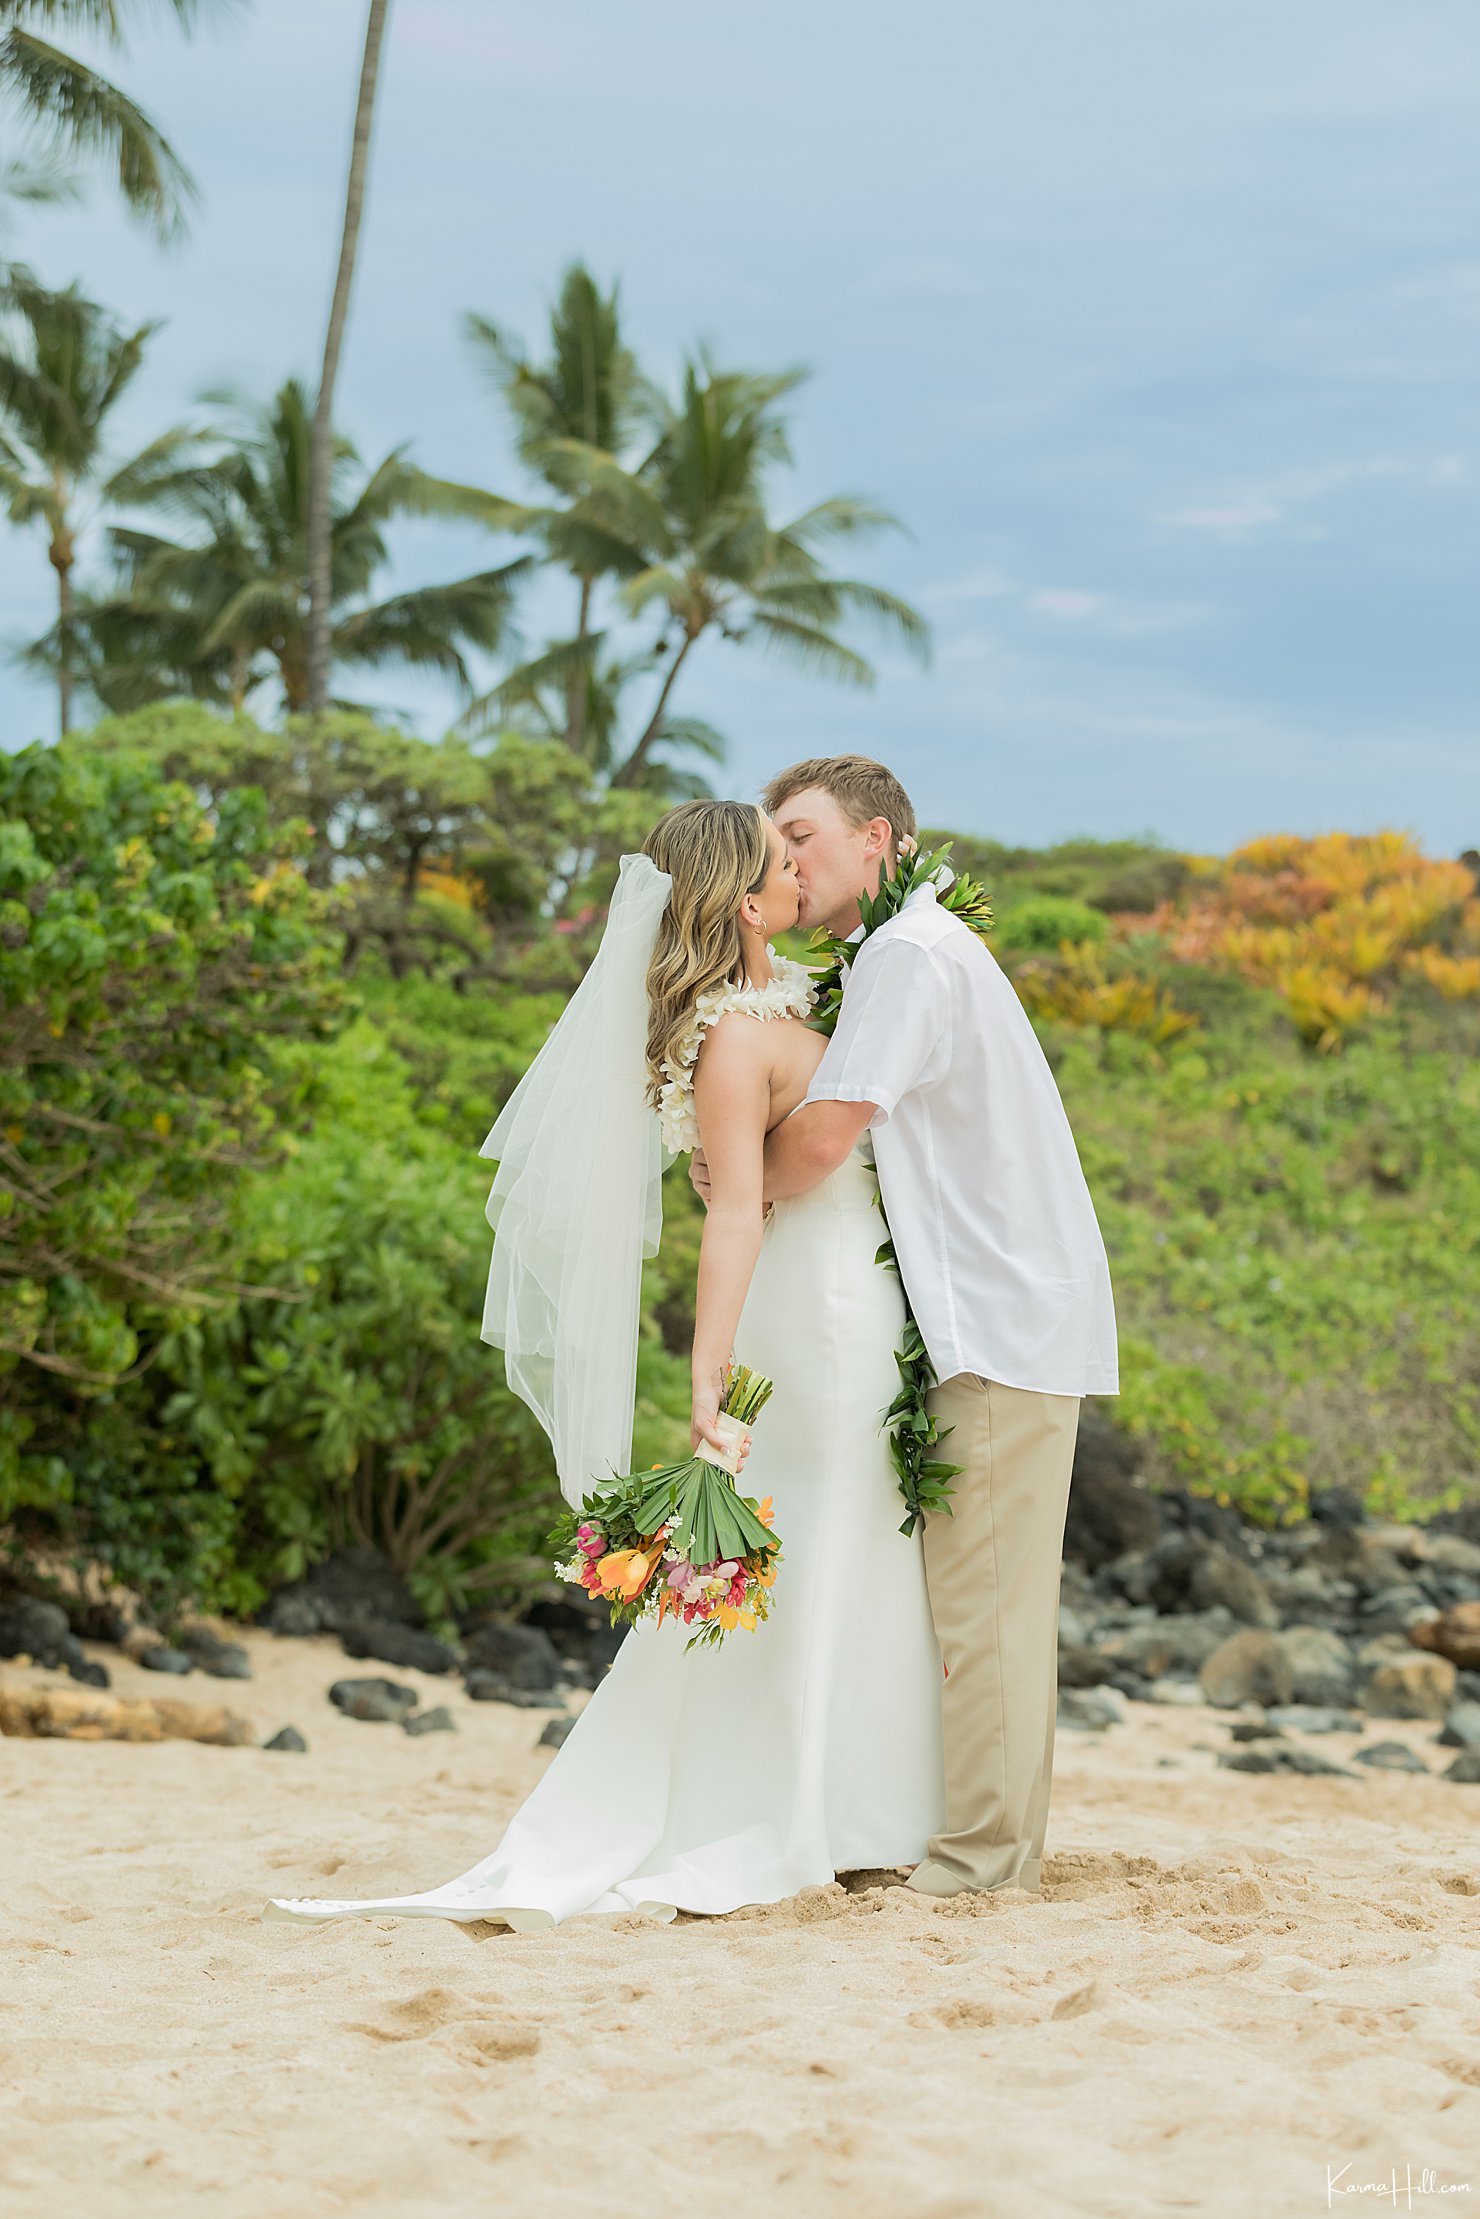 First Kiss at Maui Wedding